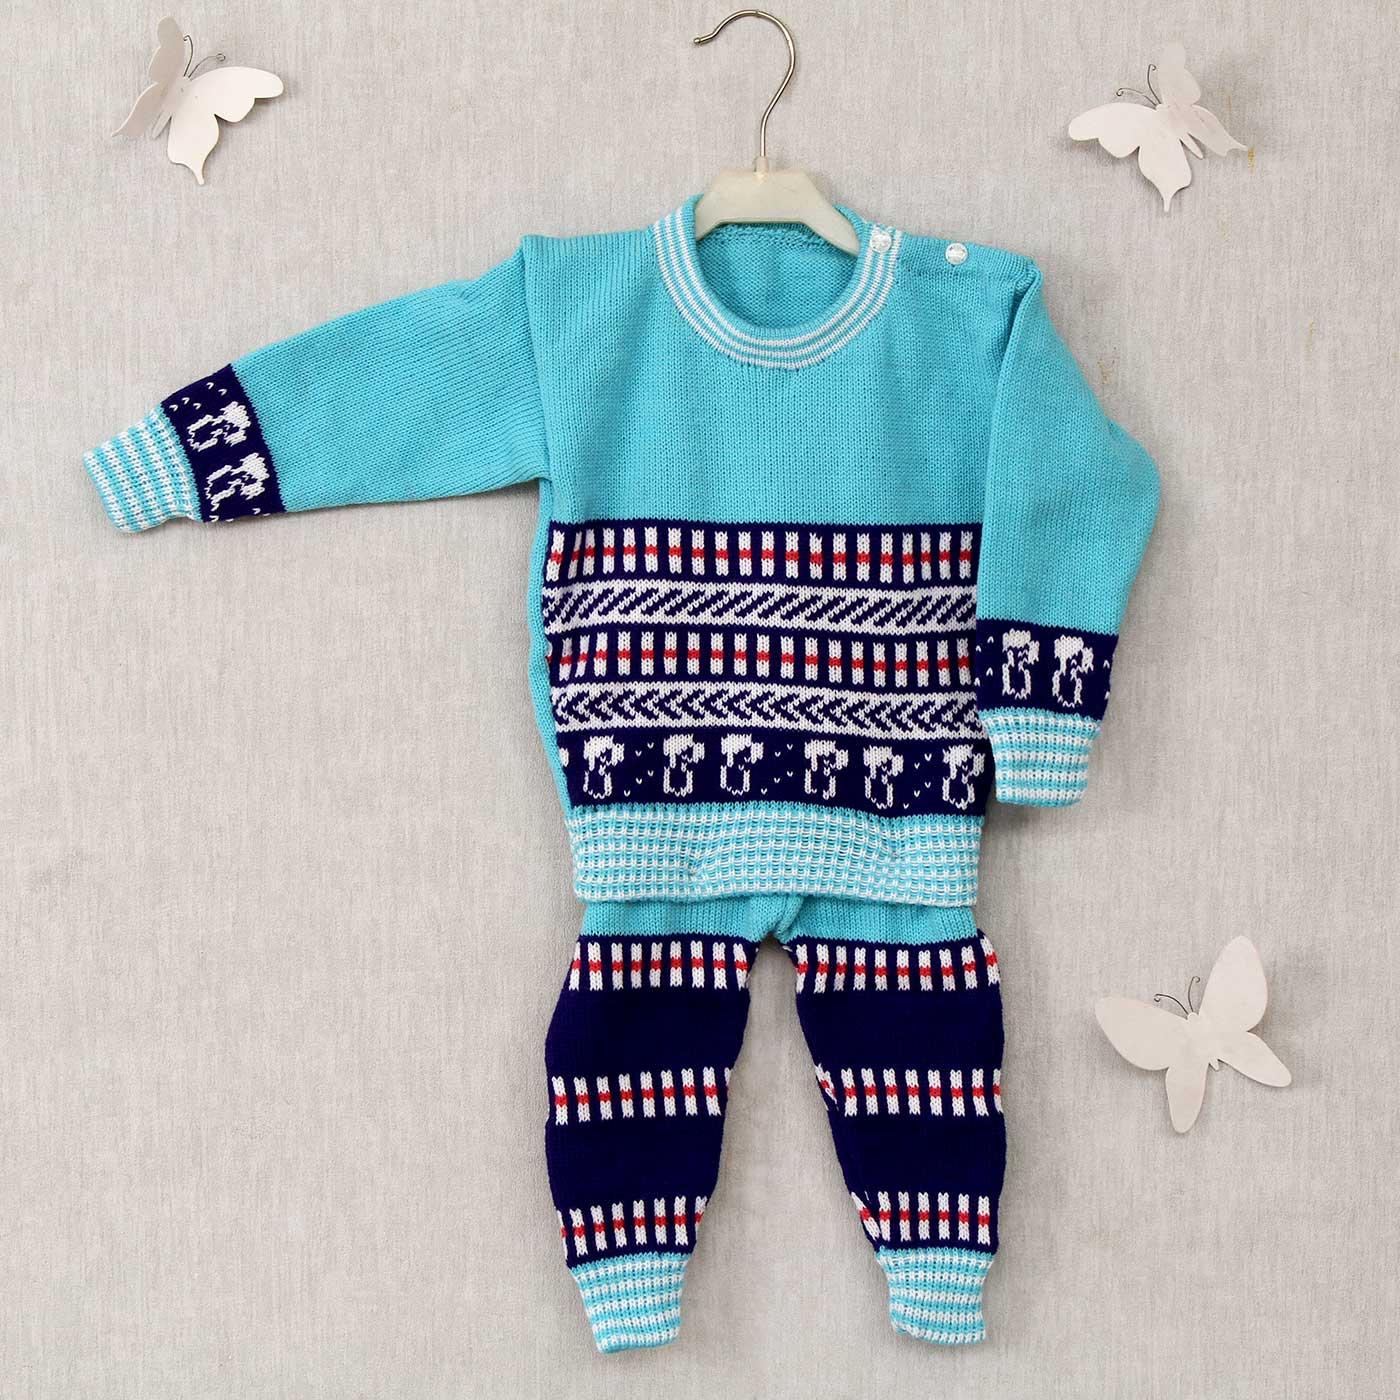 woolen sweater set for baby boy